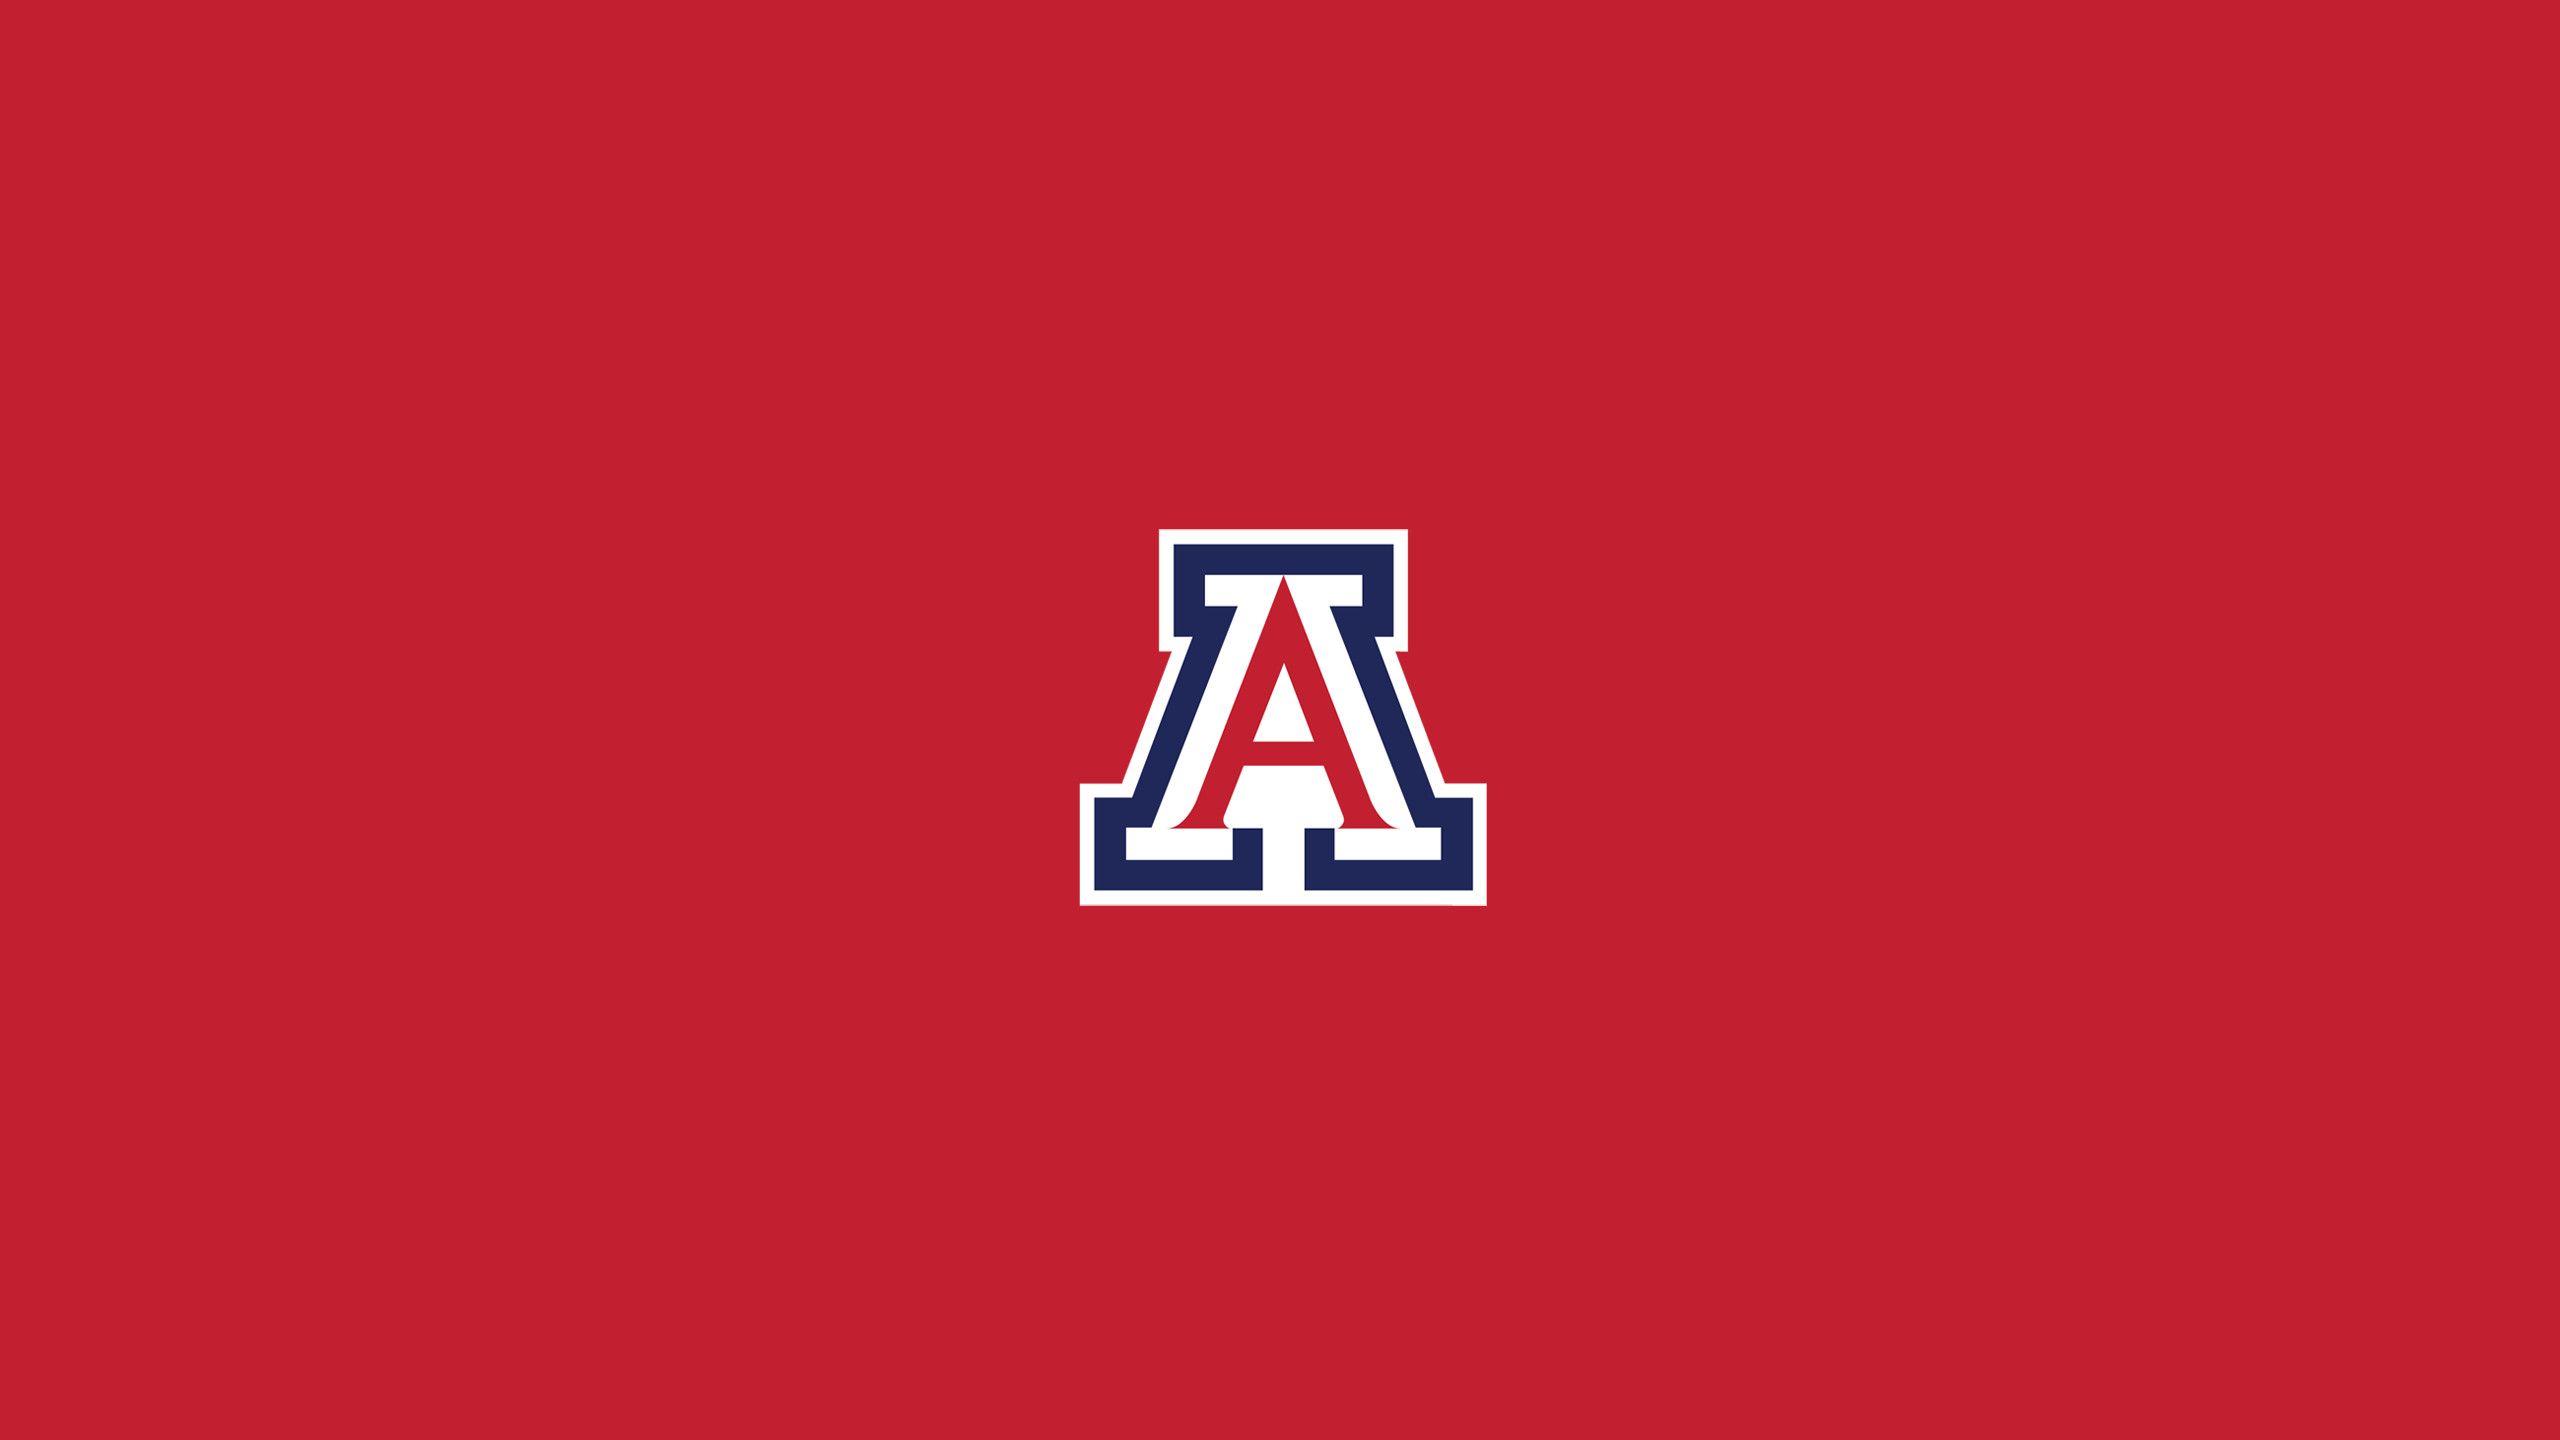 University of Arizona Wildcats Logo - LogoDix